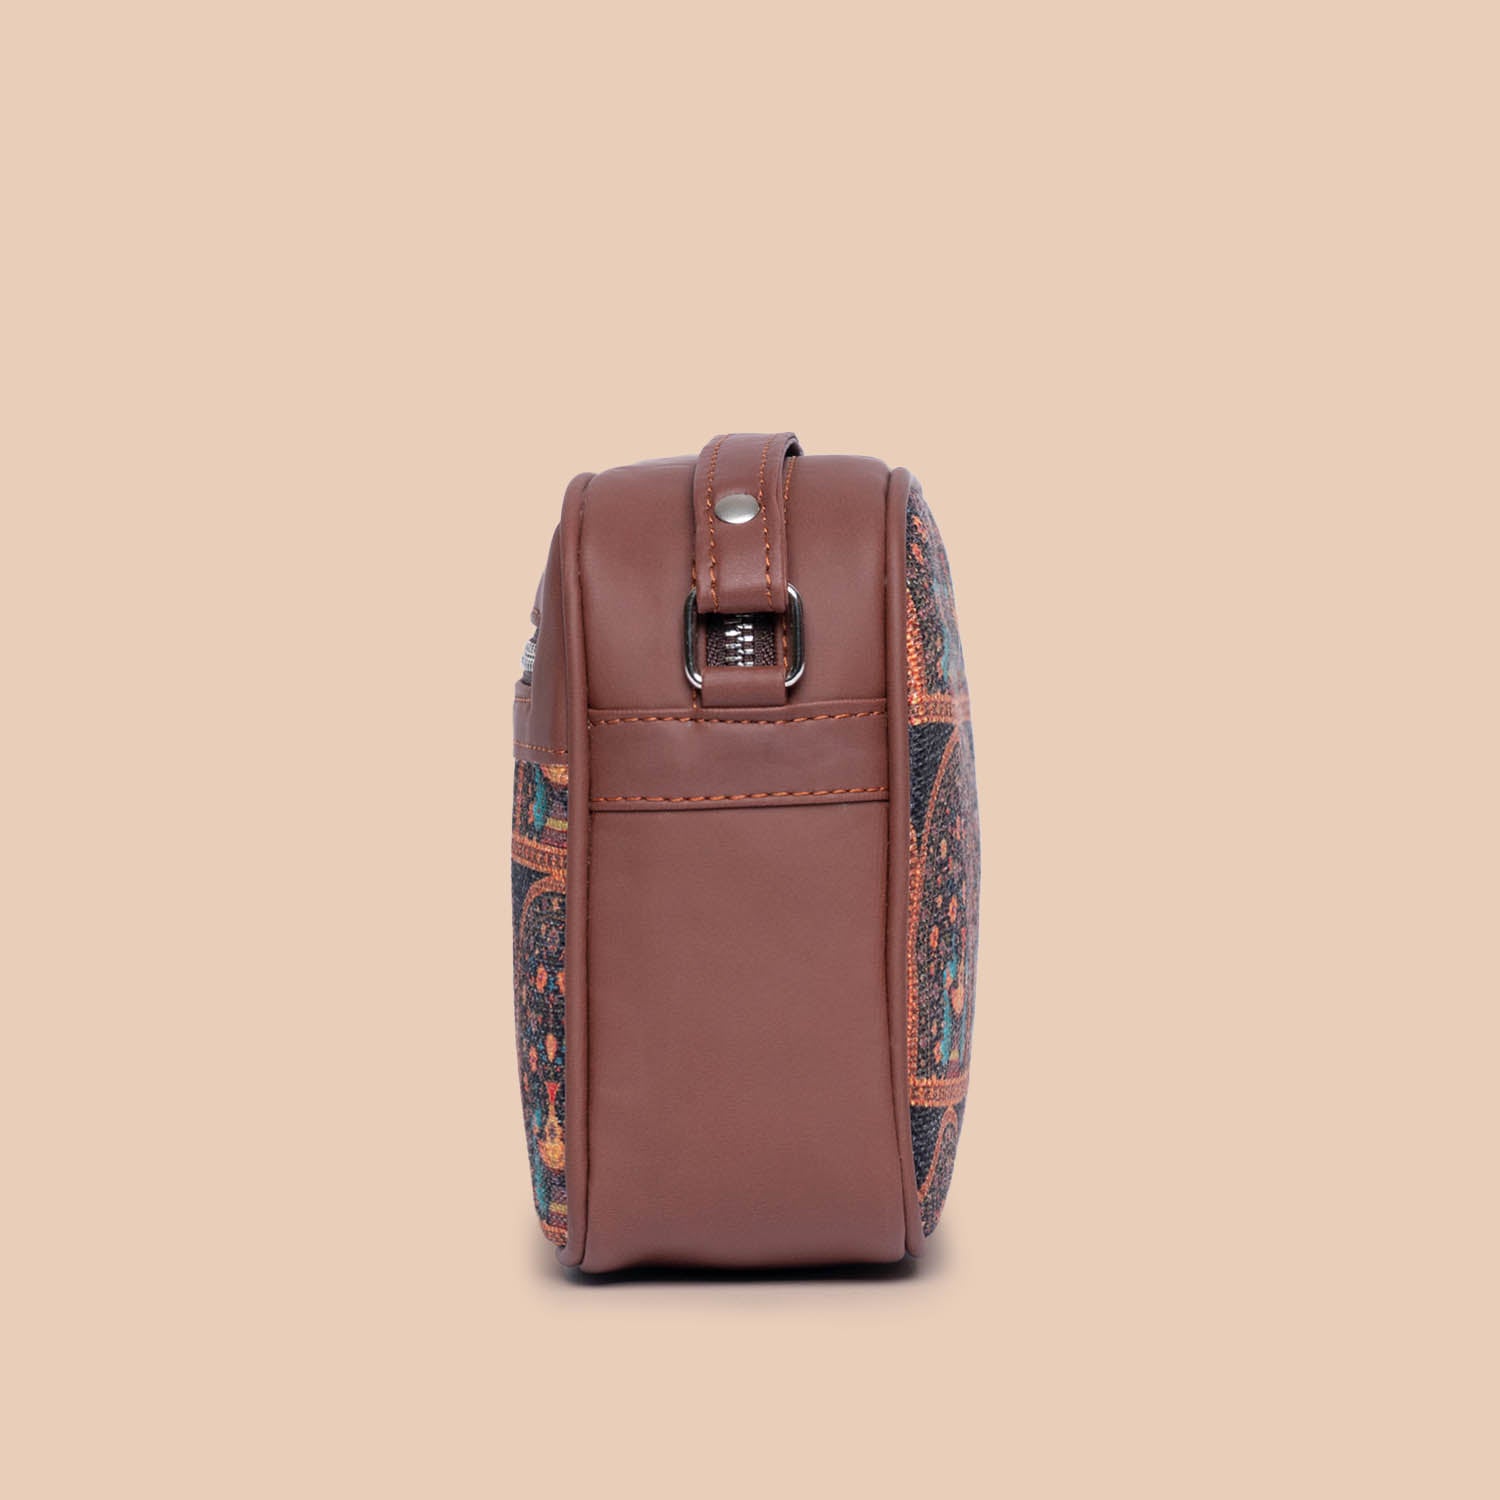 Royal Indian Peacock Motif - Statement Office Bag & Regular Sling Bag Combo